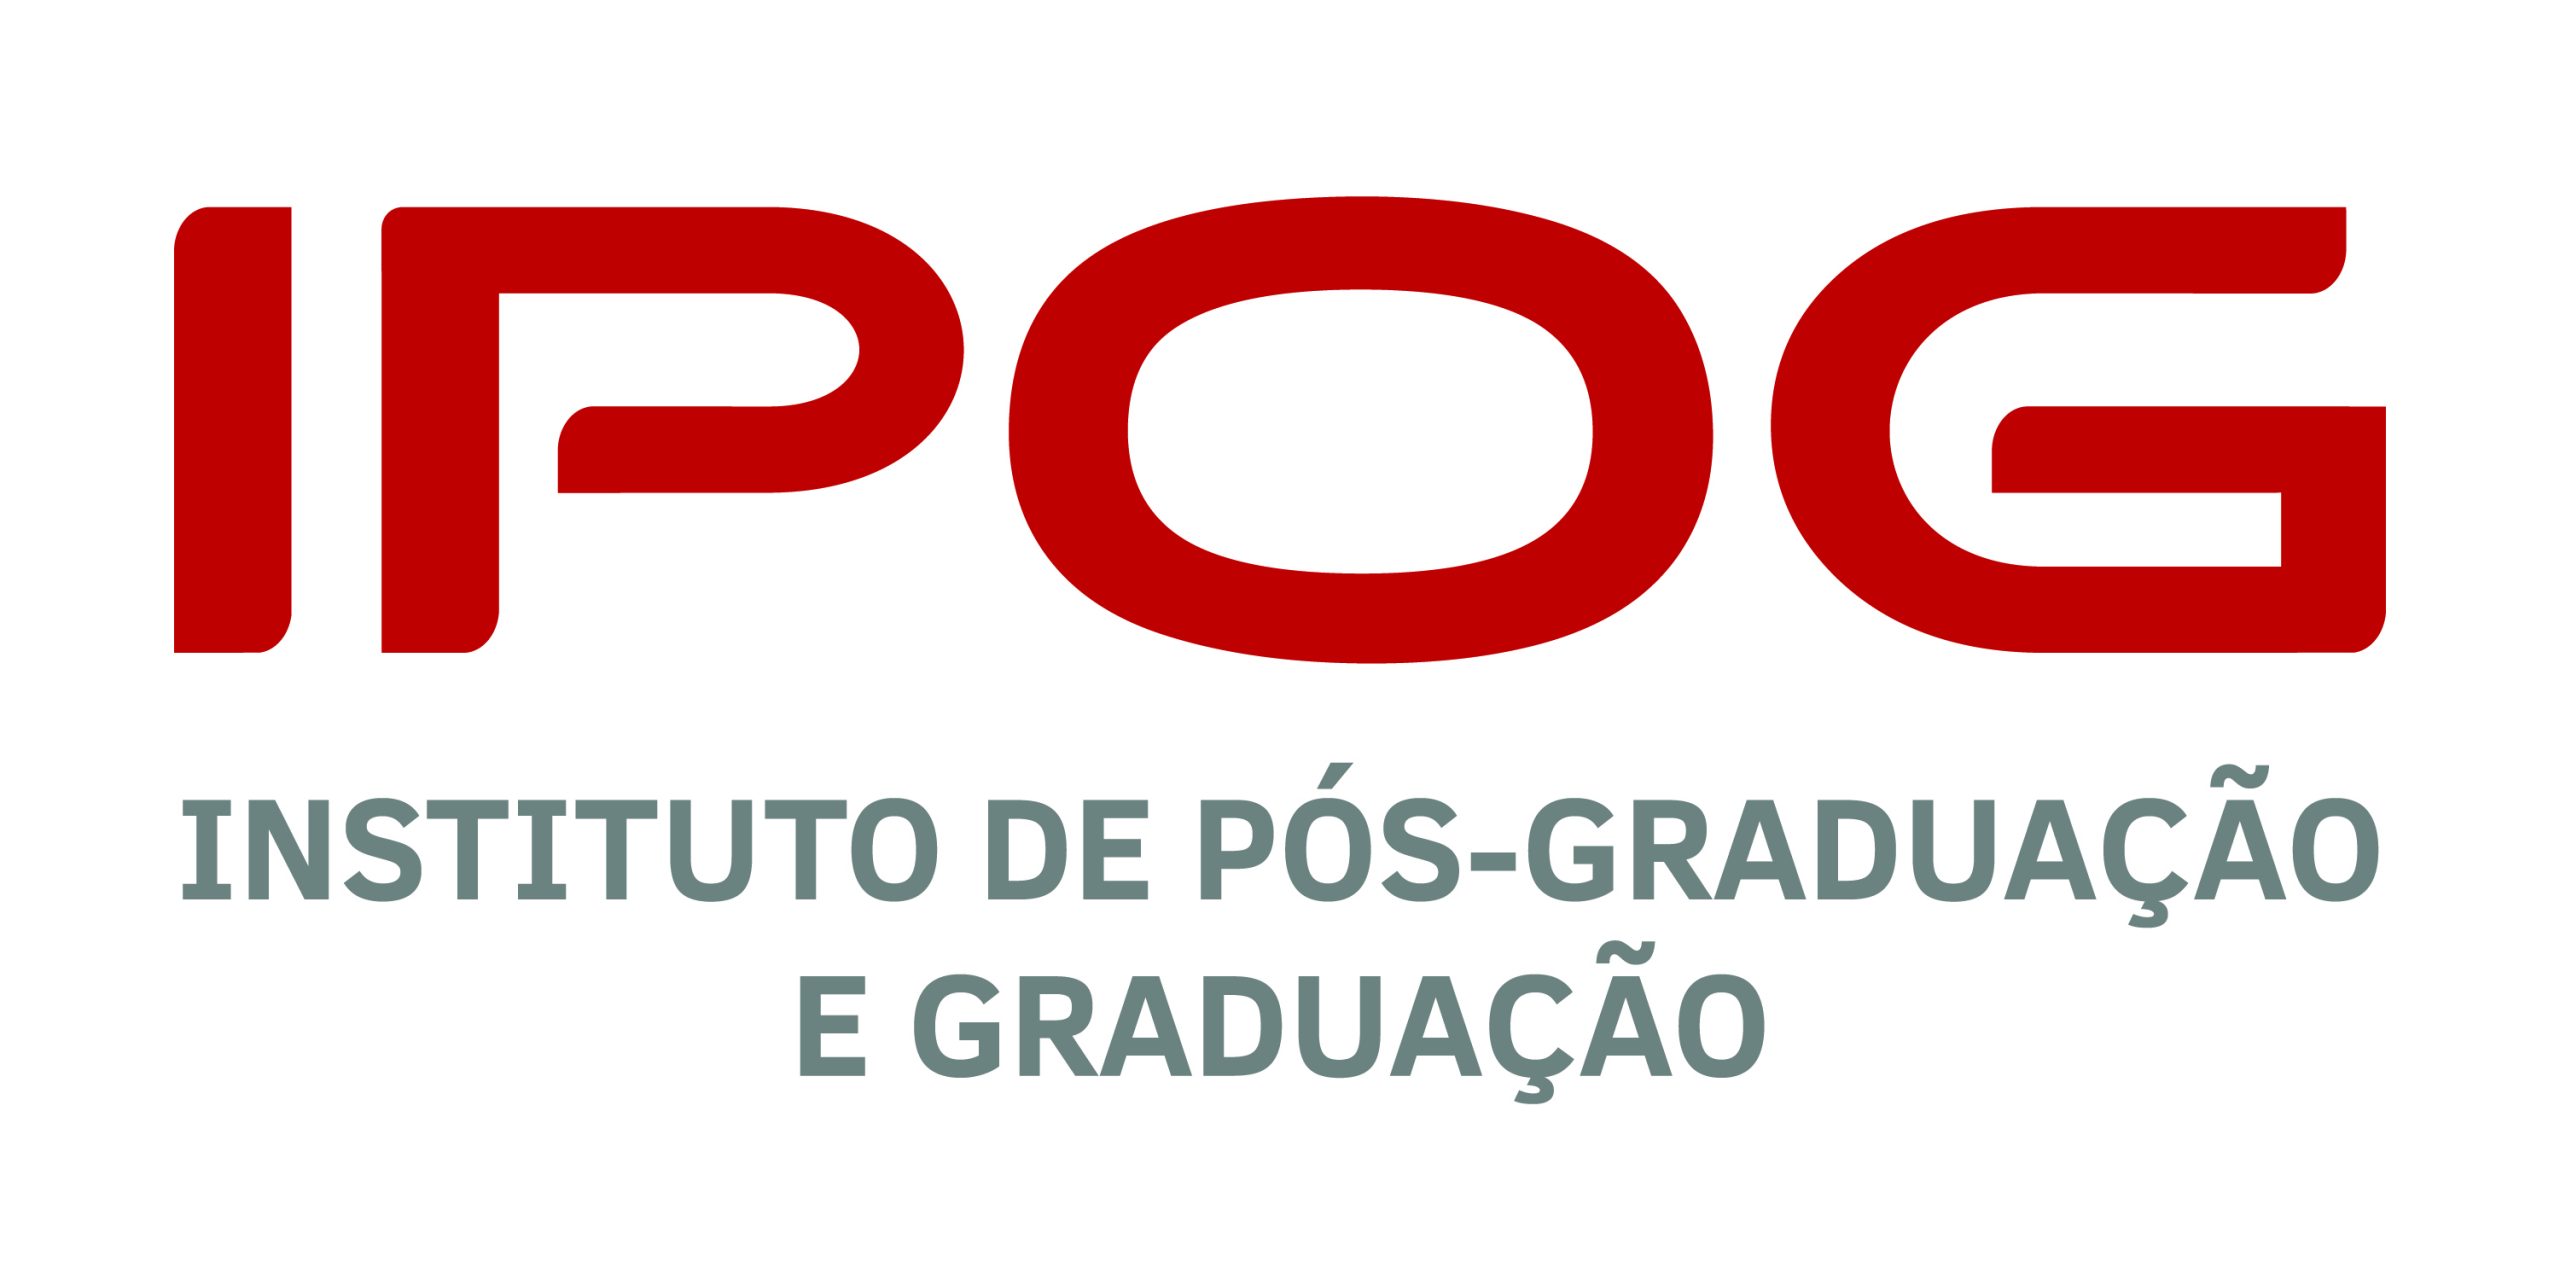 IPOG - Instituto de Pós-Graduação e Graduação-2Line